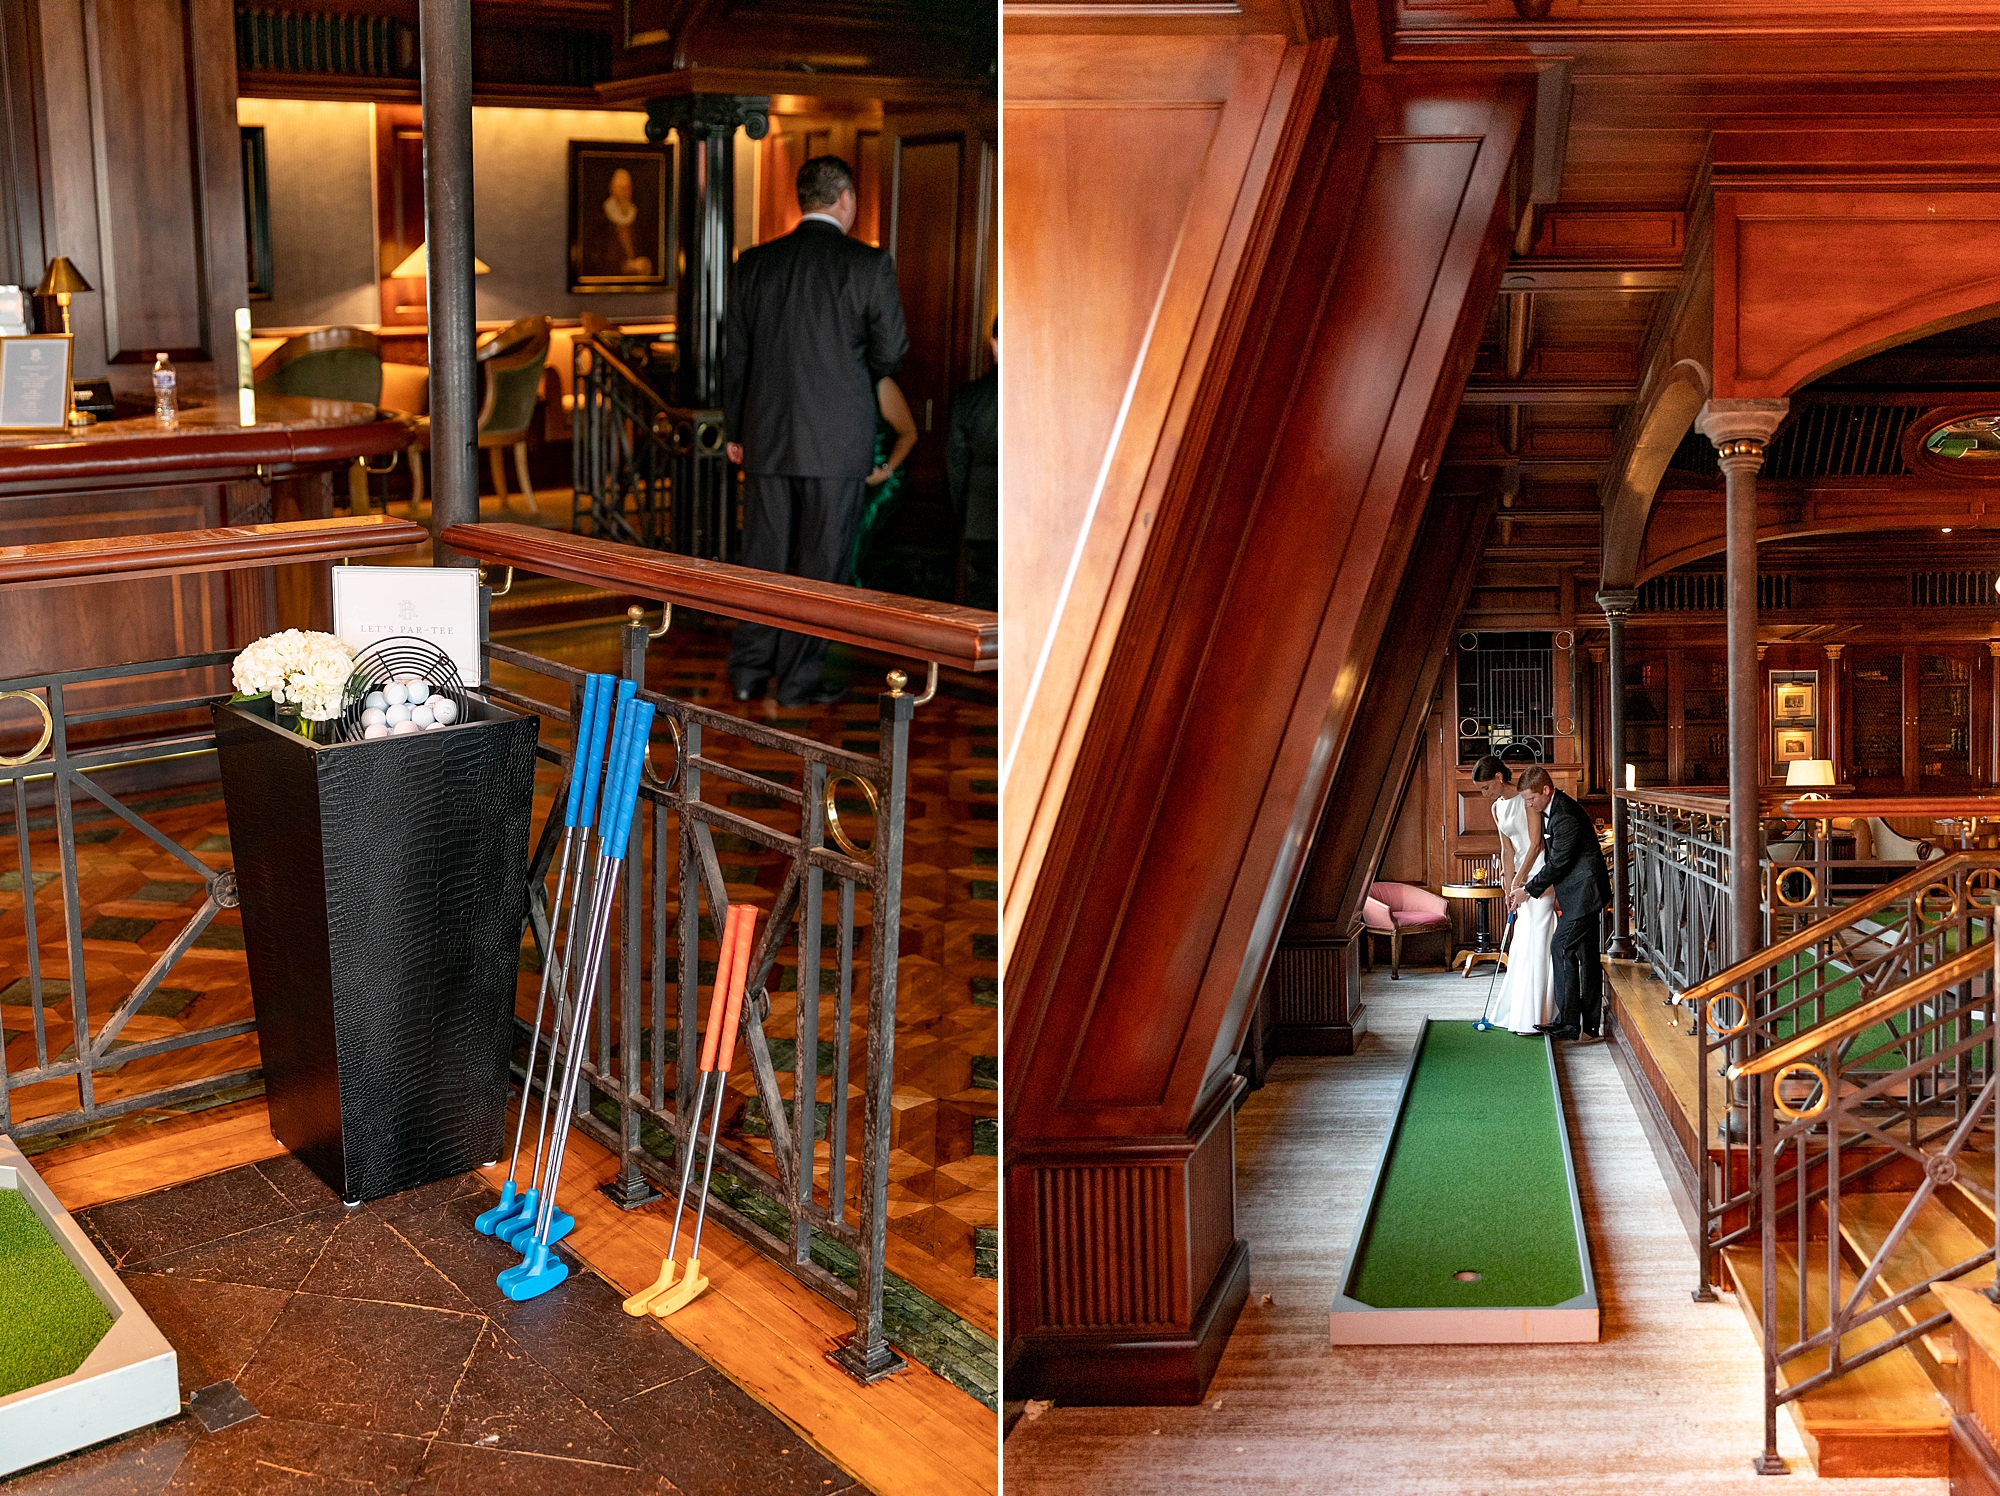 golf station setup inside the Hotel Crescent Court for wedding reception 